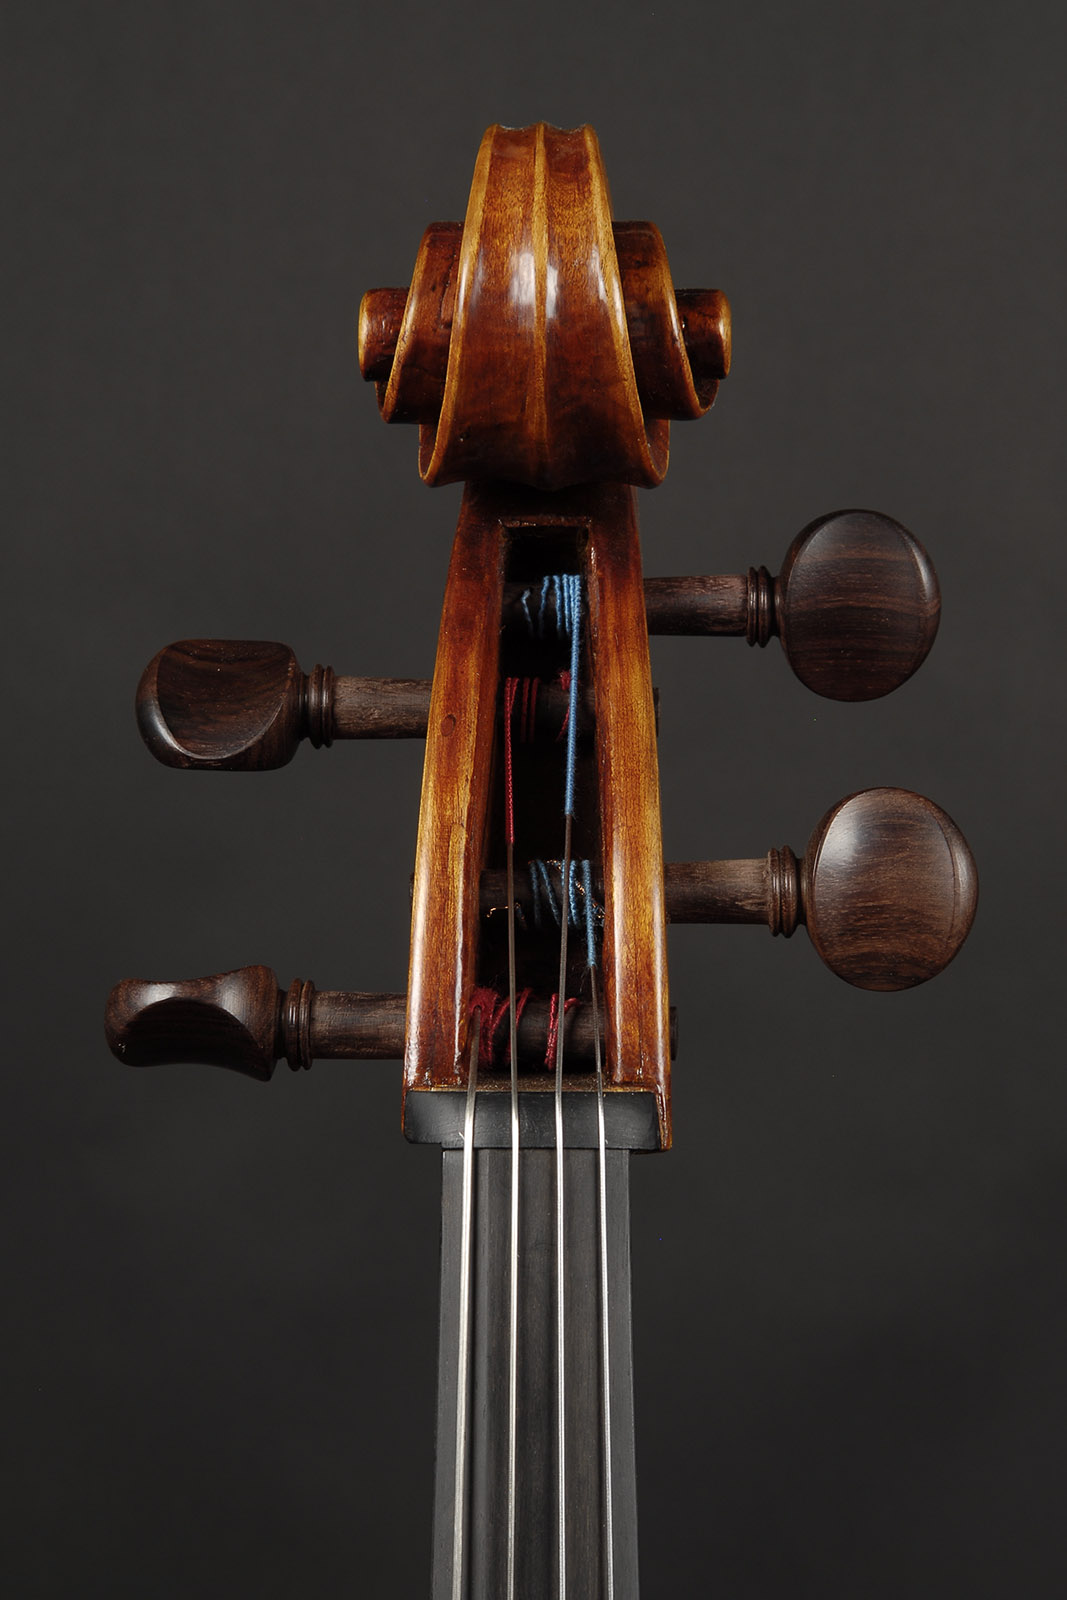 Antonio Stradivari Cremona 1730 “Feuermann“ “Maremmano“ - Image 8